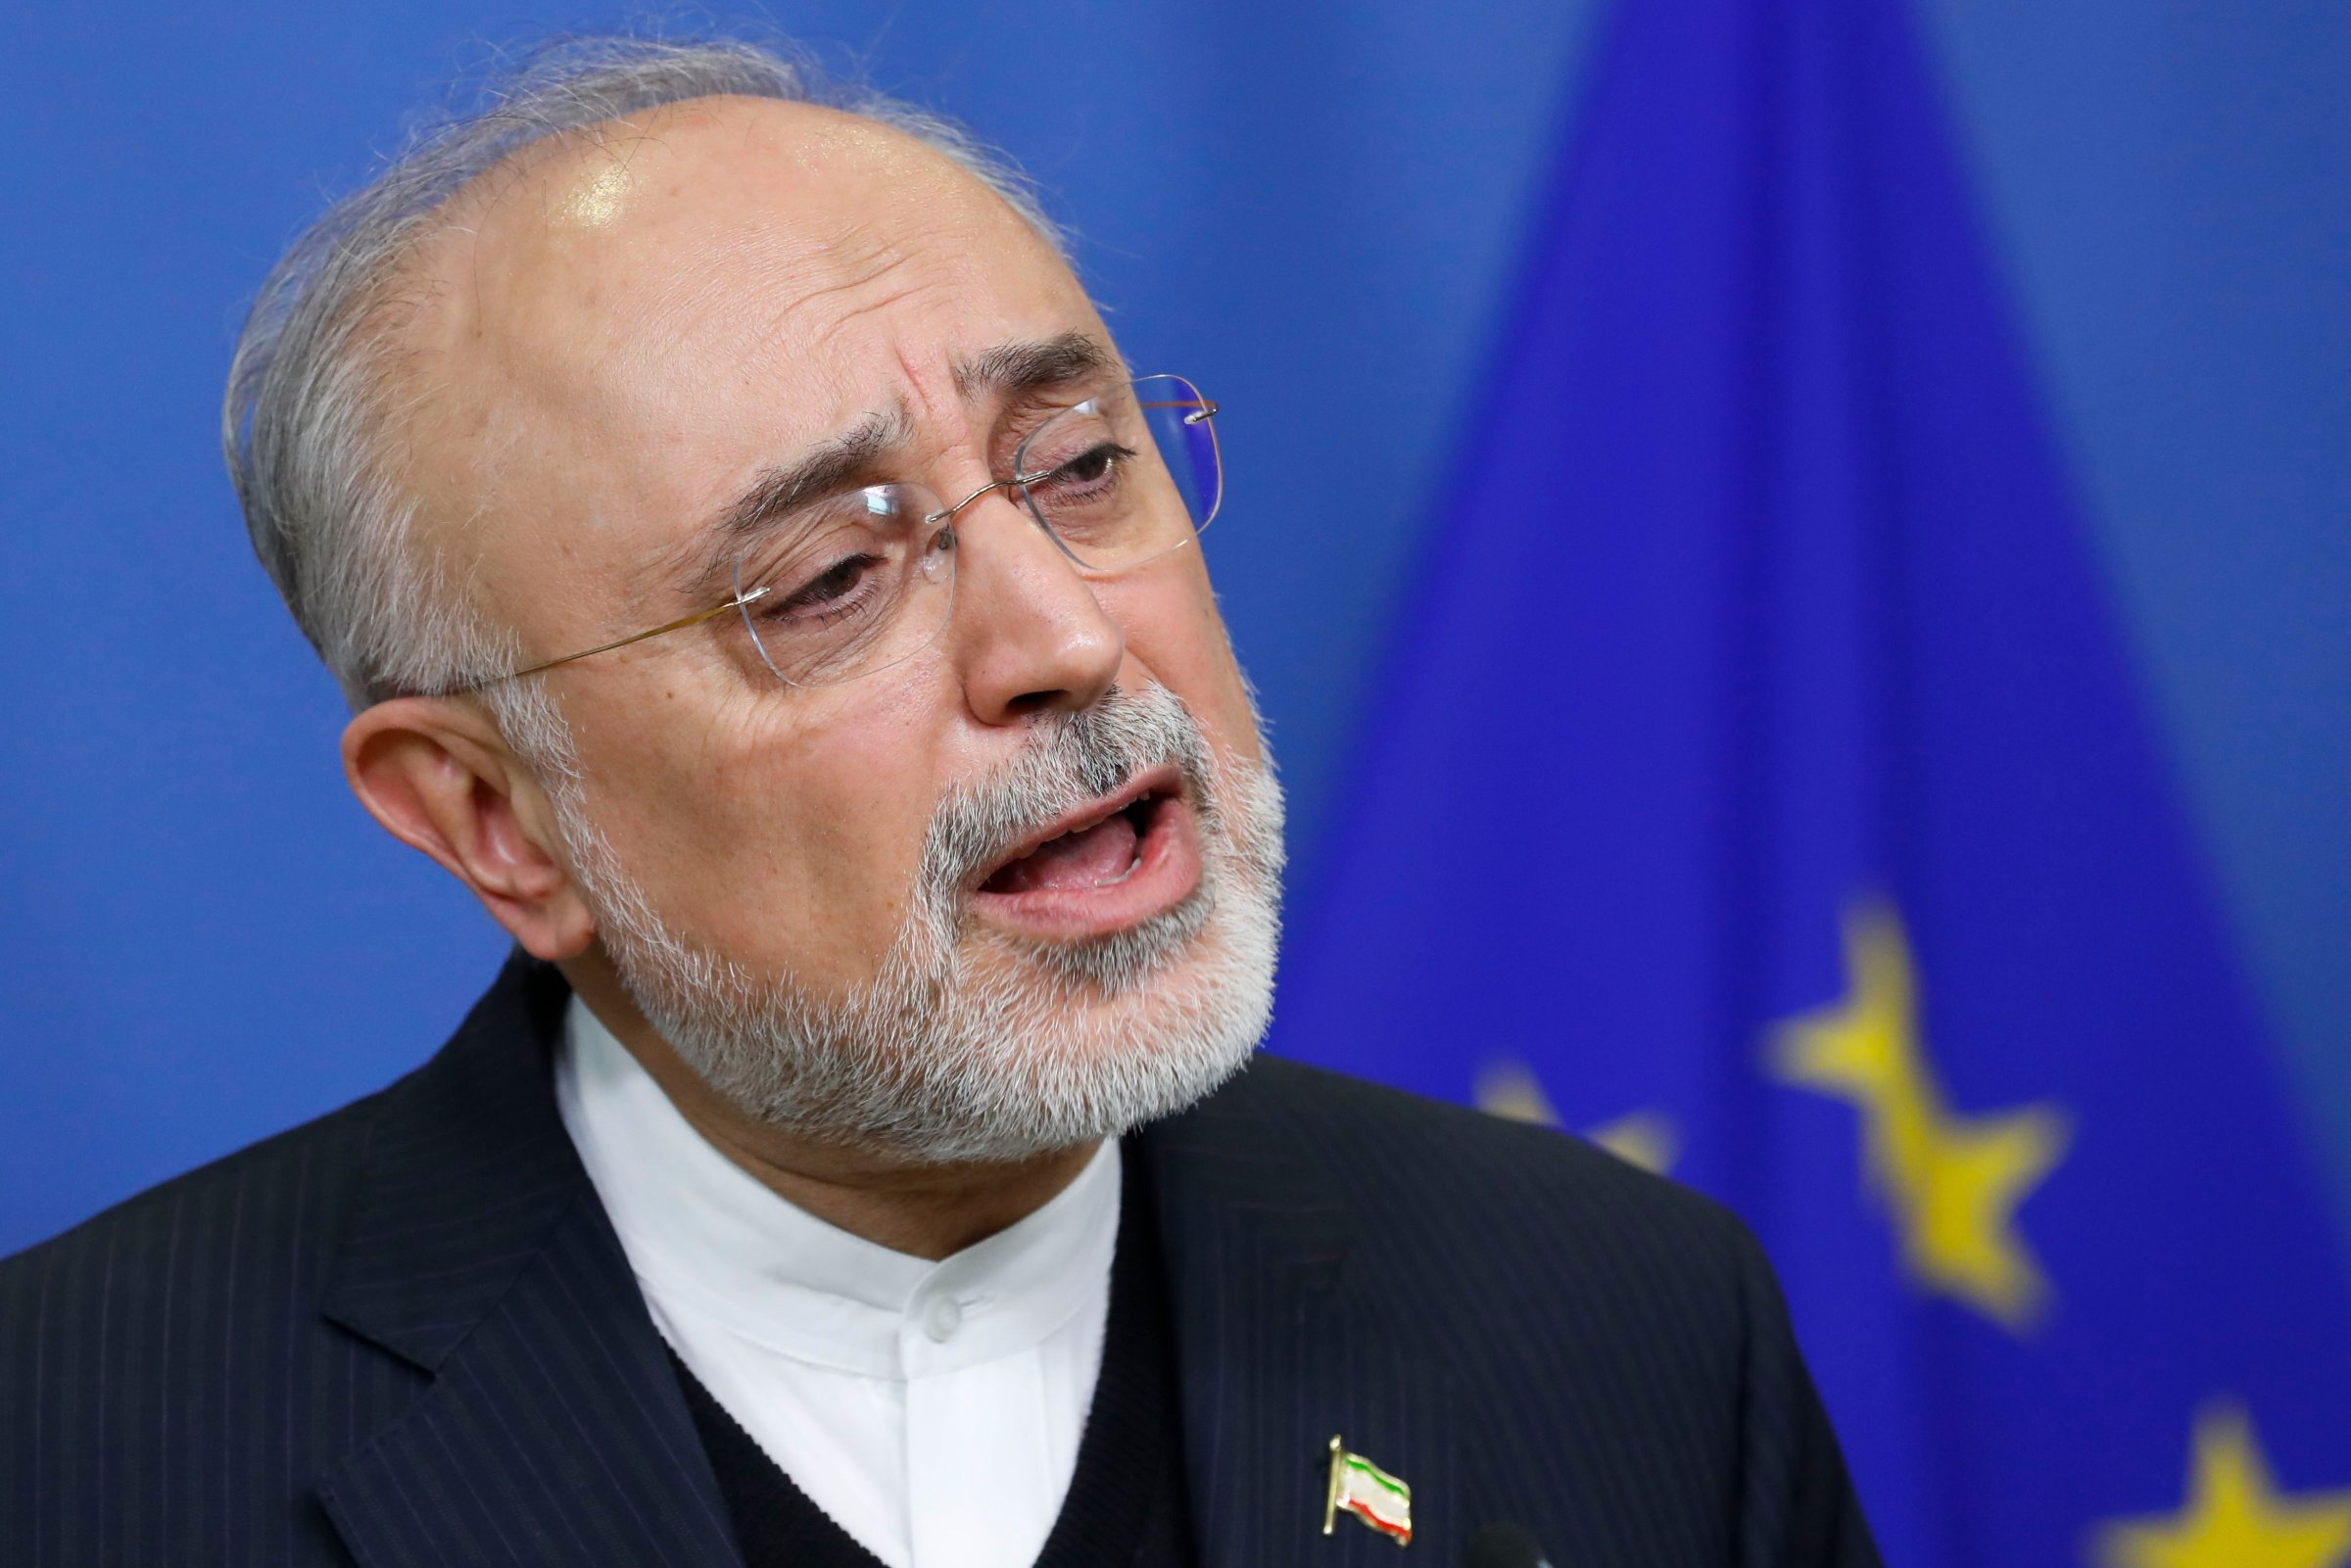 EU Commission presser on Iran Nuclear deal in Brussels, Belgium - 26 Nov 2018